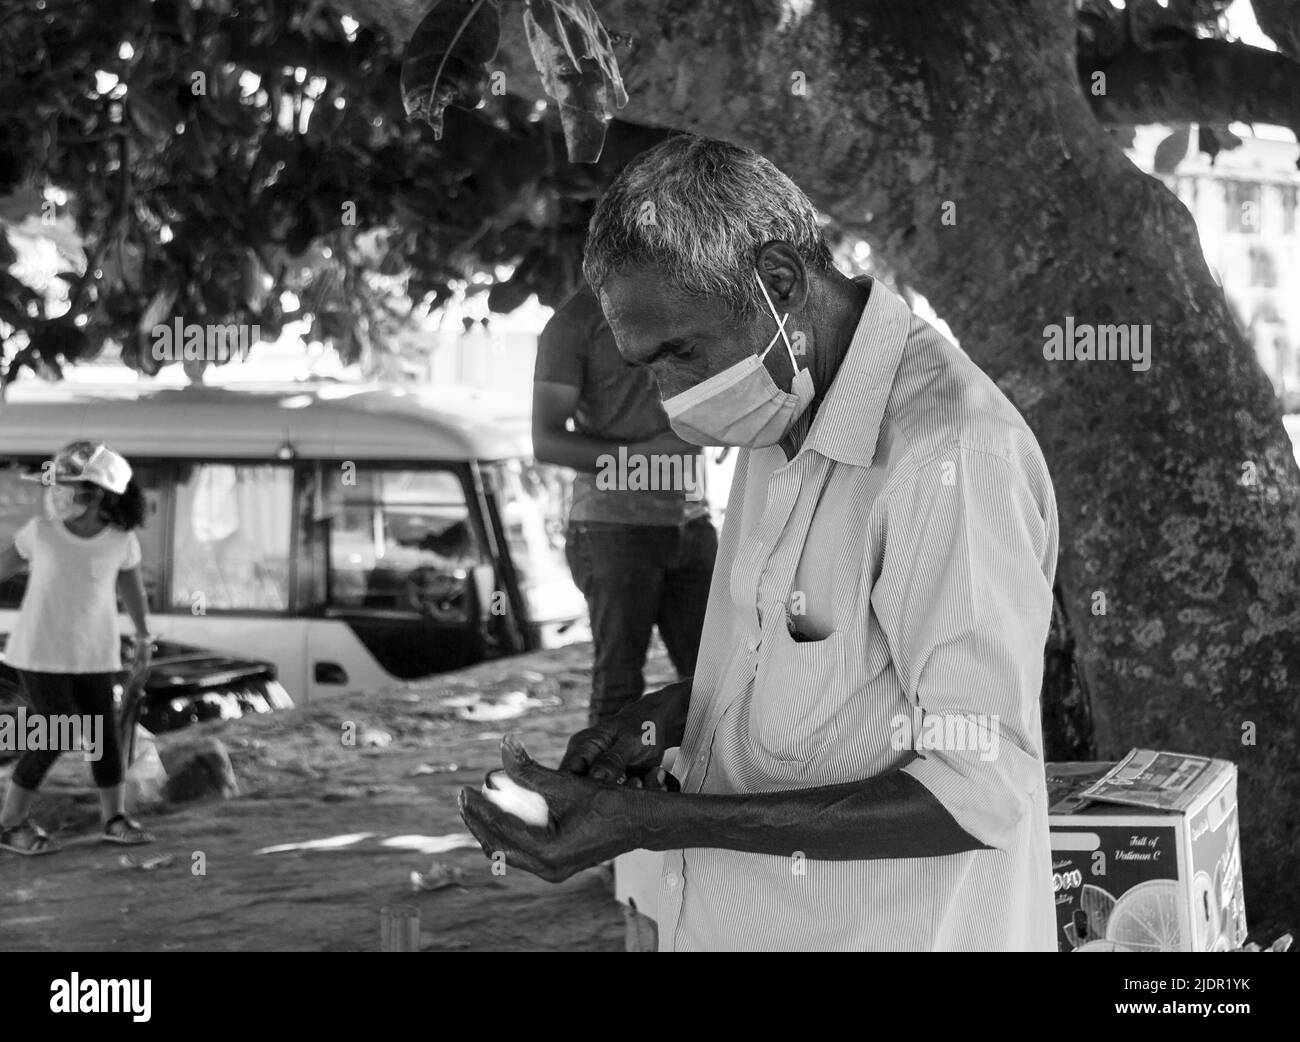 Street Vendors in Galle light house, Sri Lanka. Come visit and travel Sri Lanka. Stock Photo